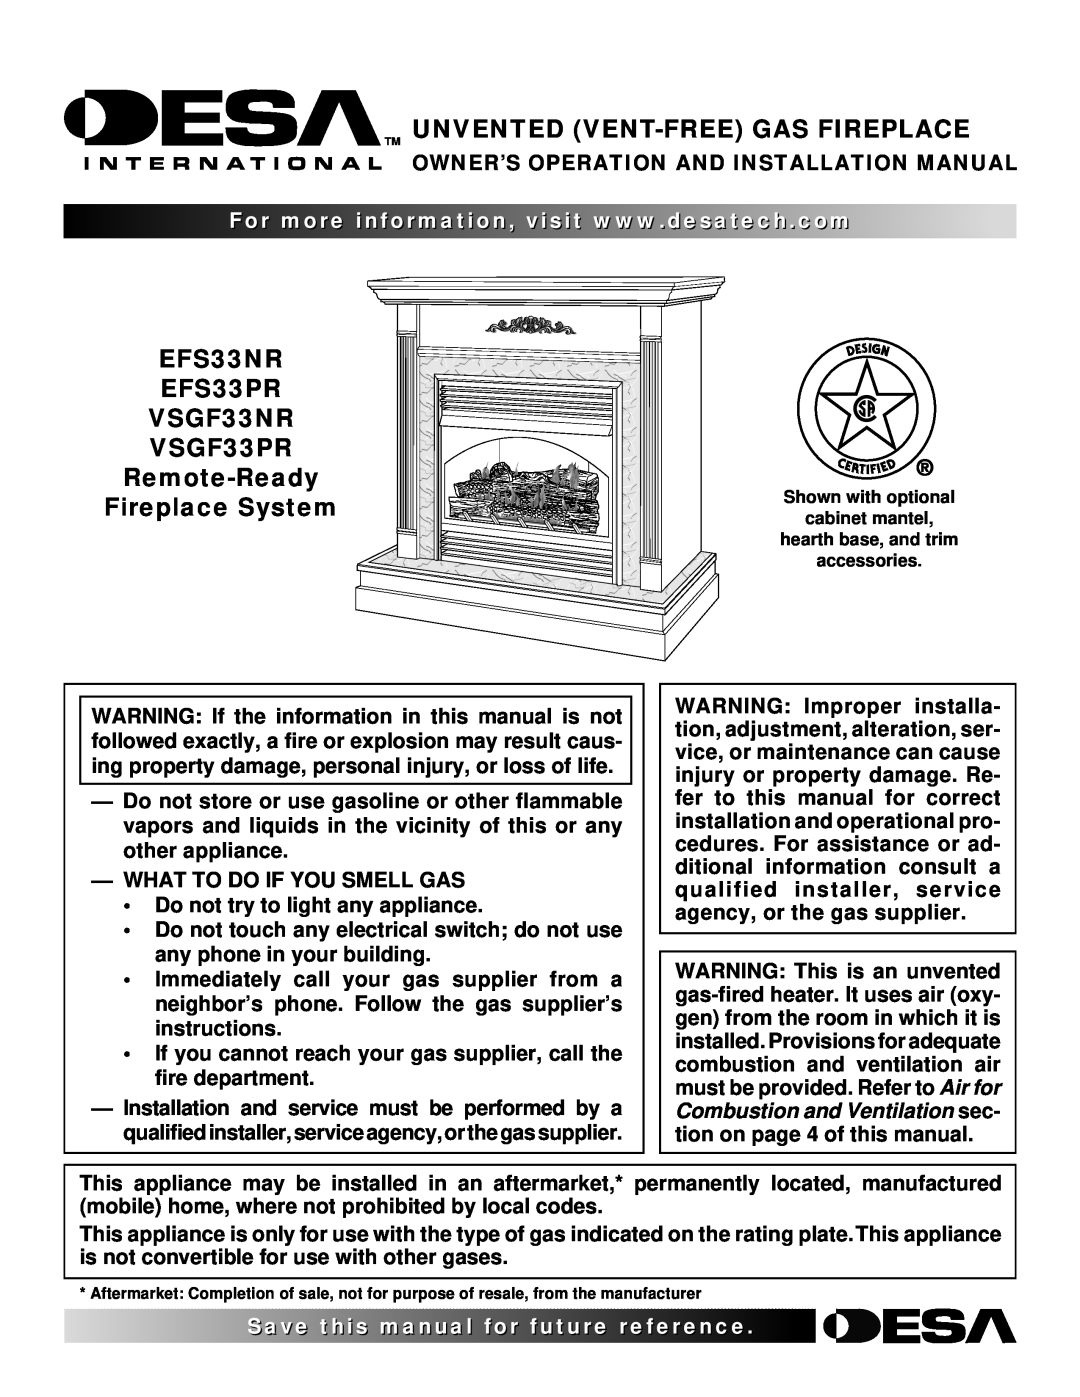 Desa EFS33PR installation manual Owner’S Operation And Installation Manual, What To Do If You Smell Gas, Fireplace System 